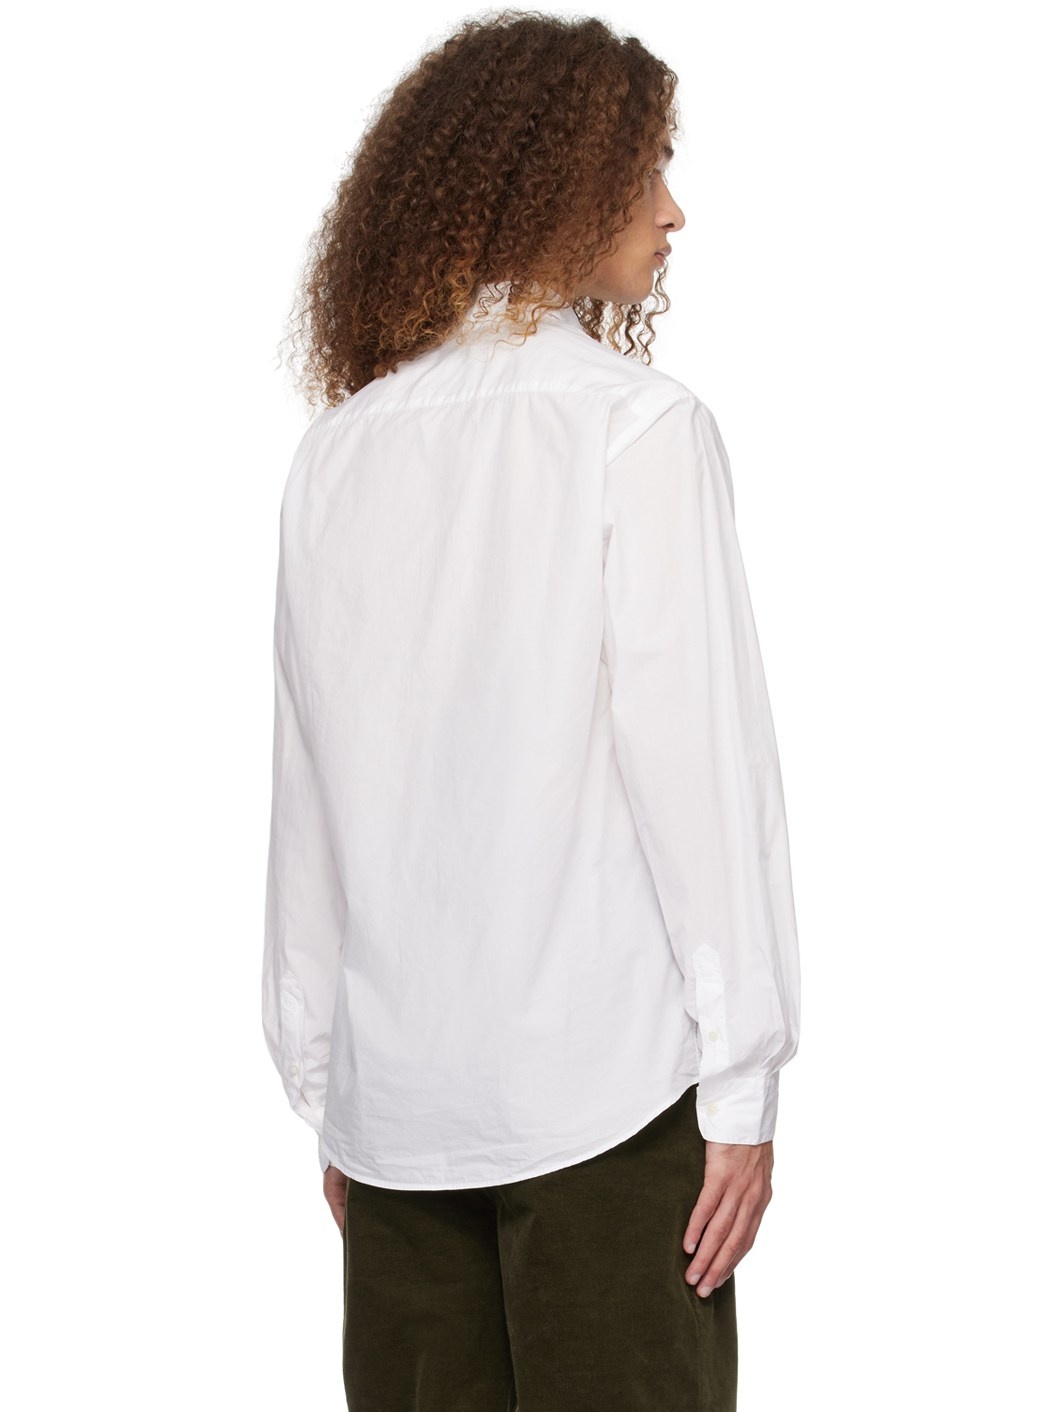 White Lightweight Shirt - 3